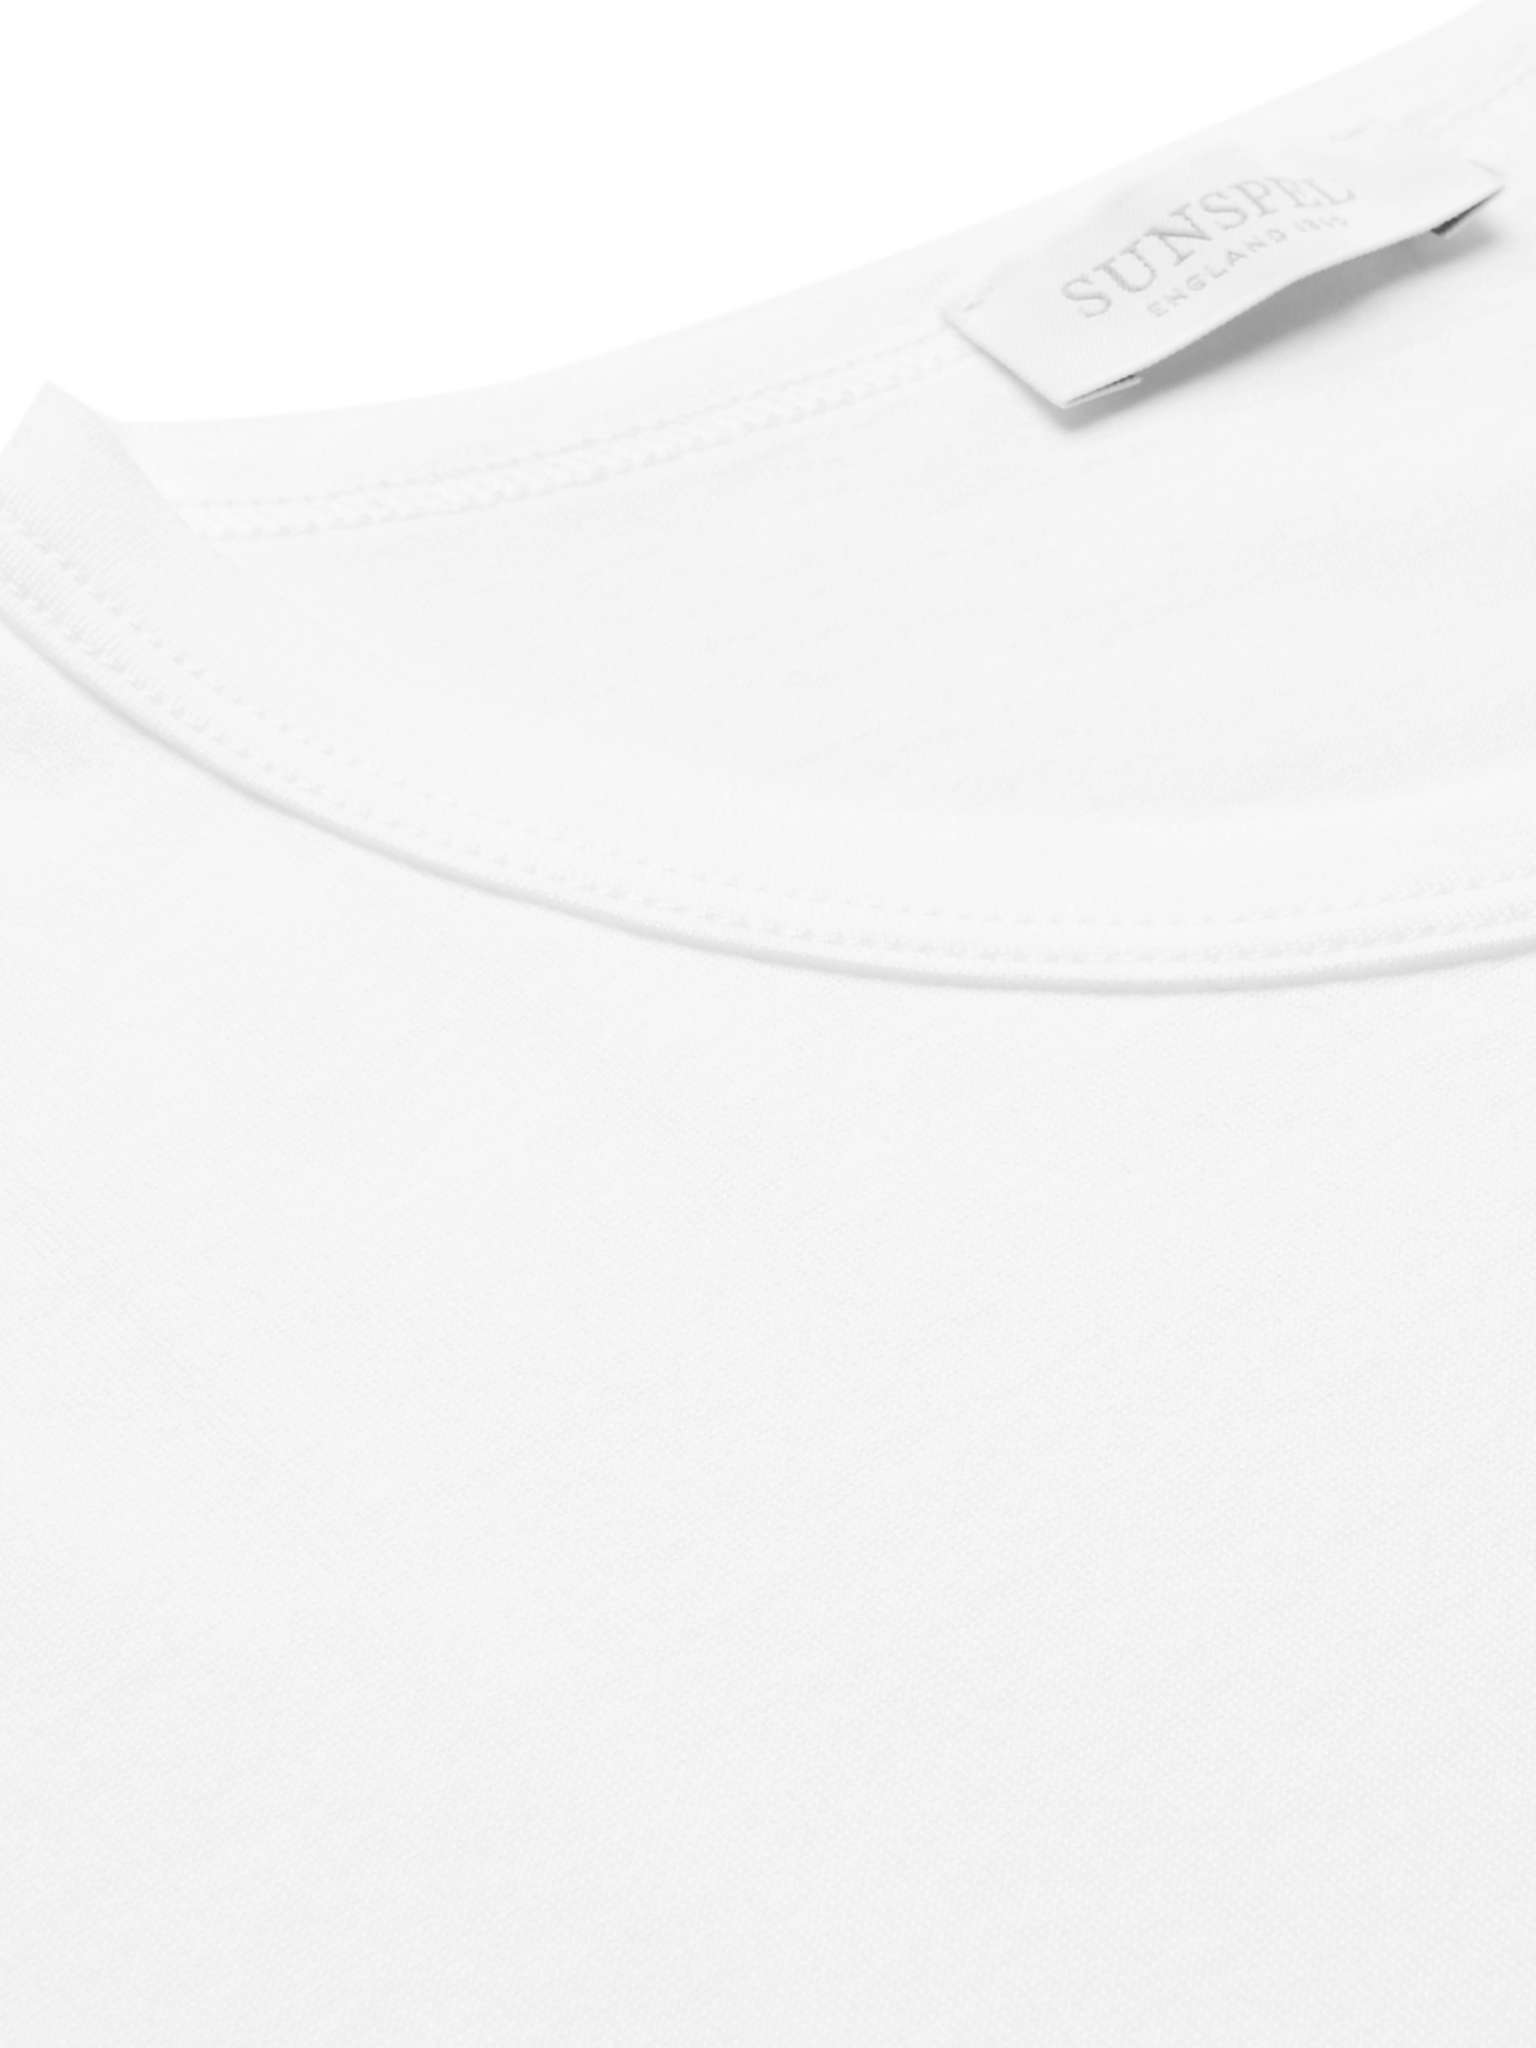 SUNSPEL Cotton-Jersey T-Shirt for Men | MR PORTER